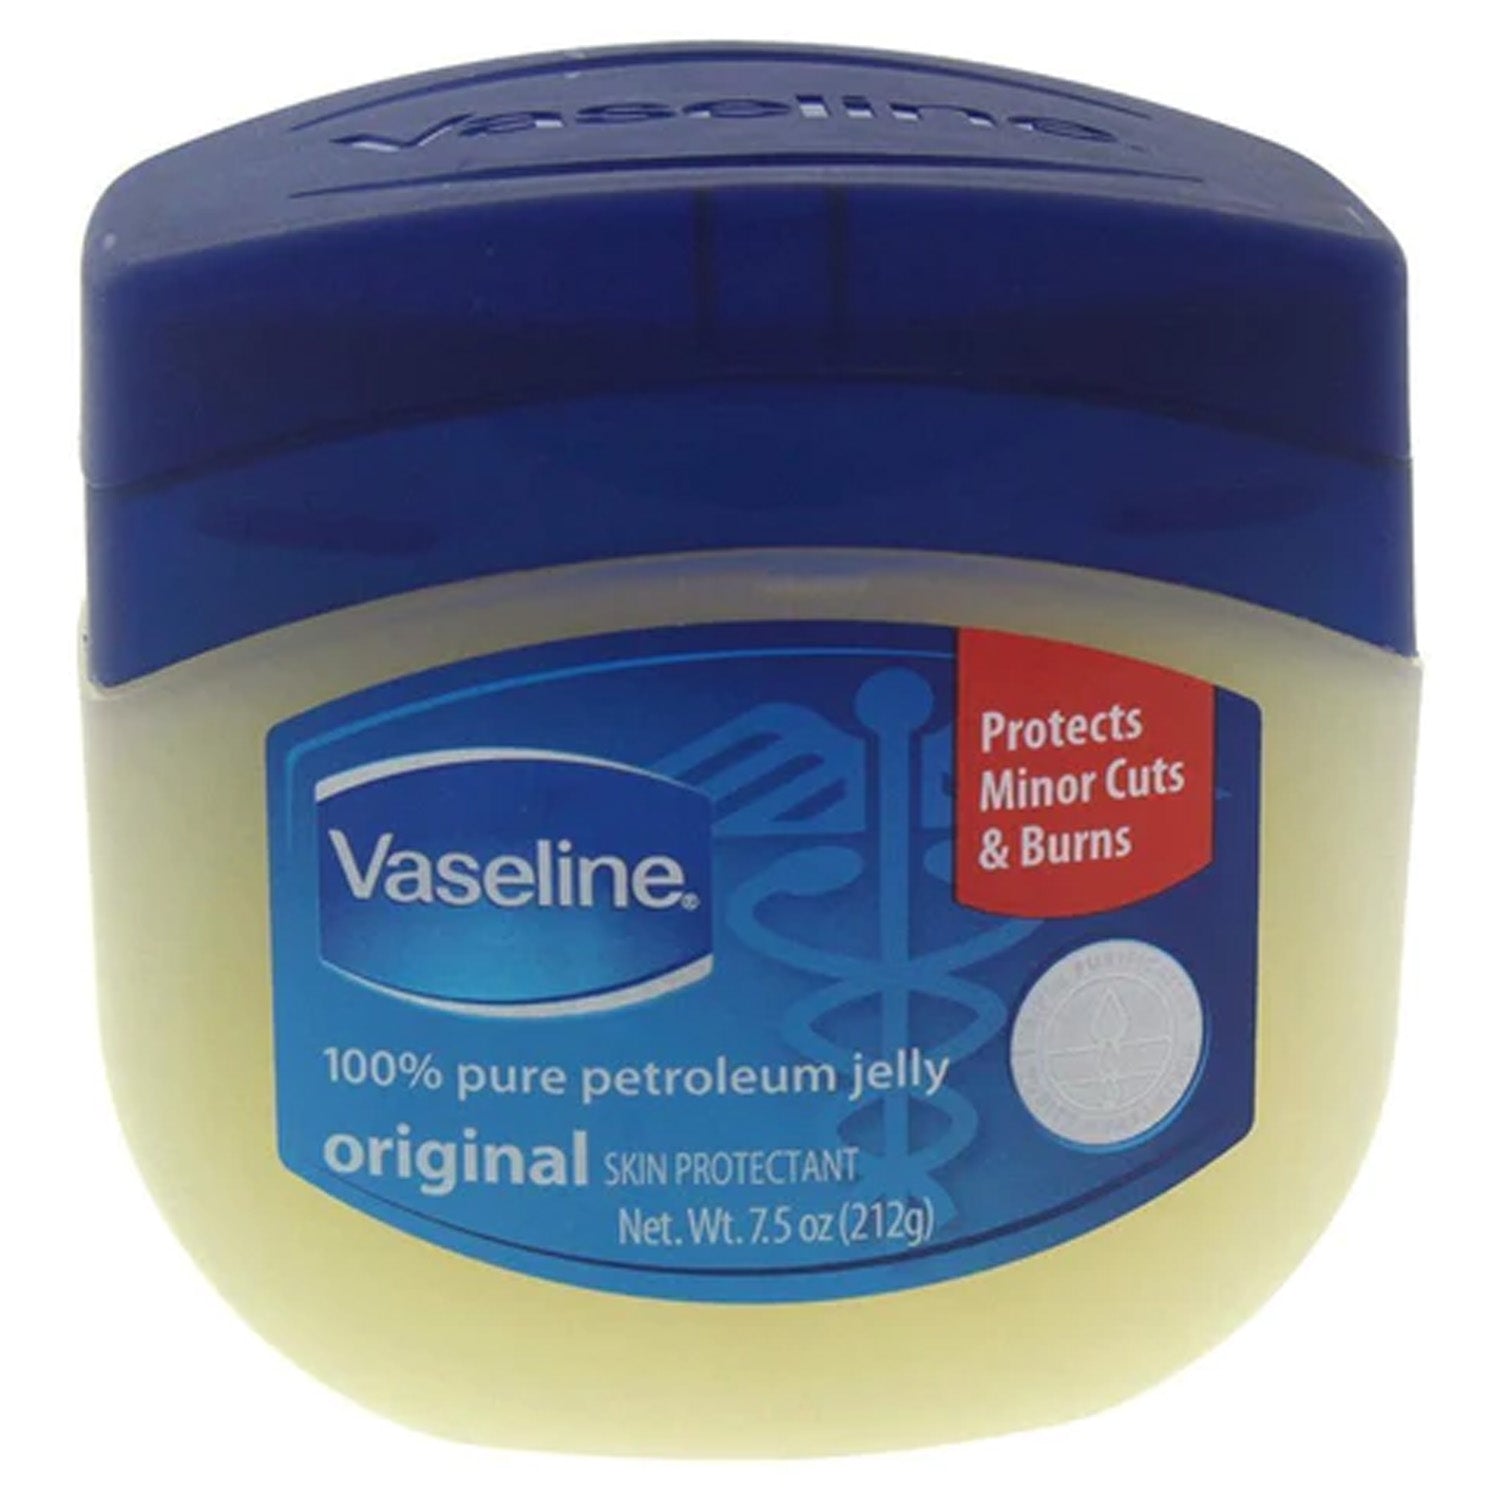 Vaseline - 100% Pure Petroleum Jelly